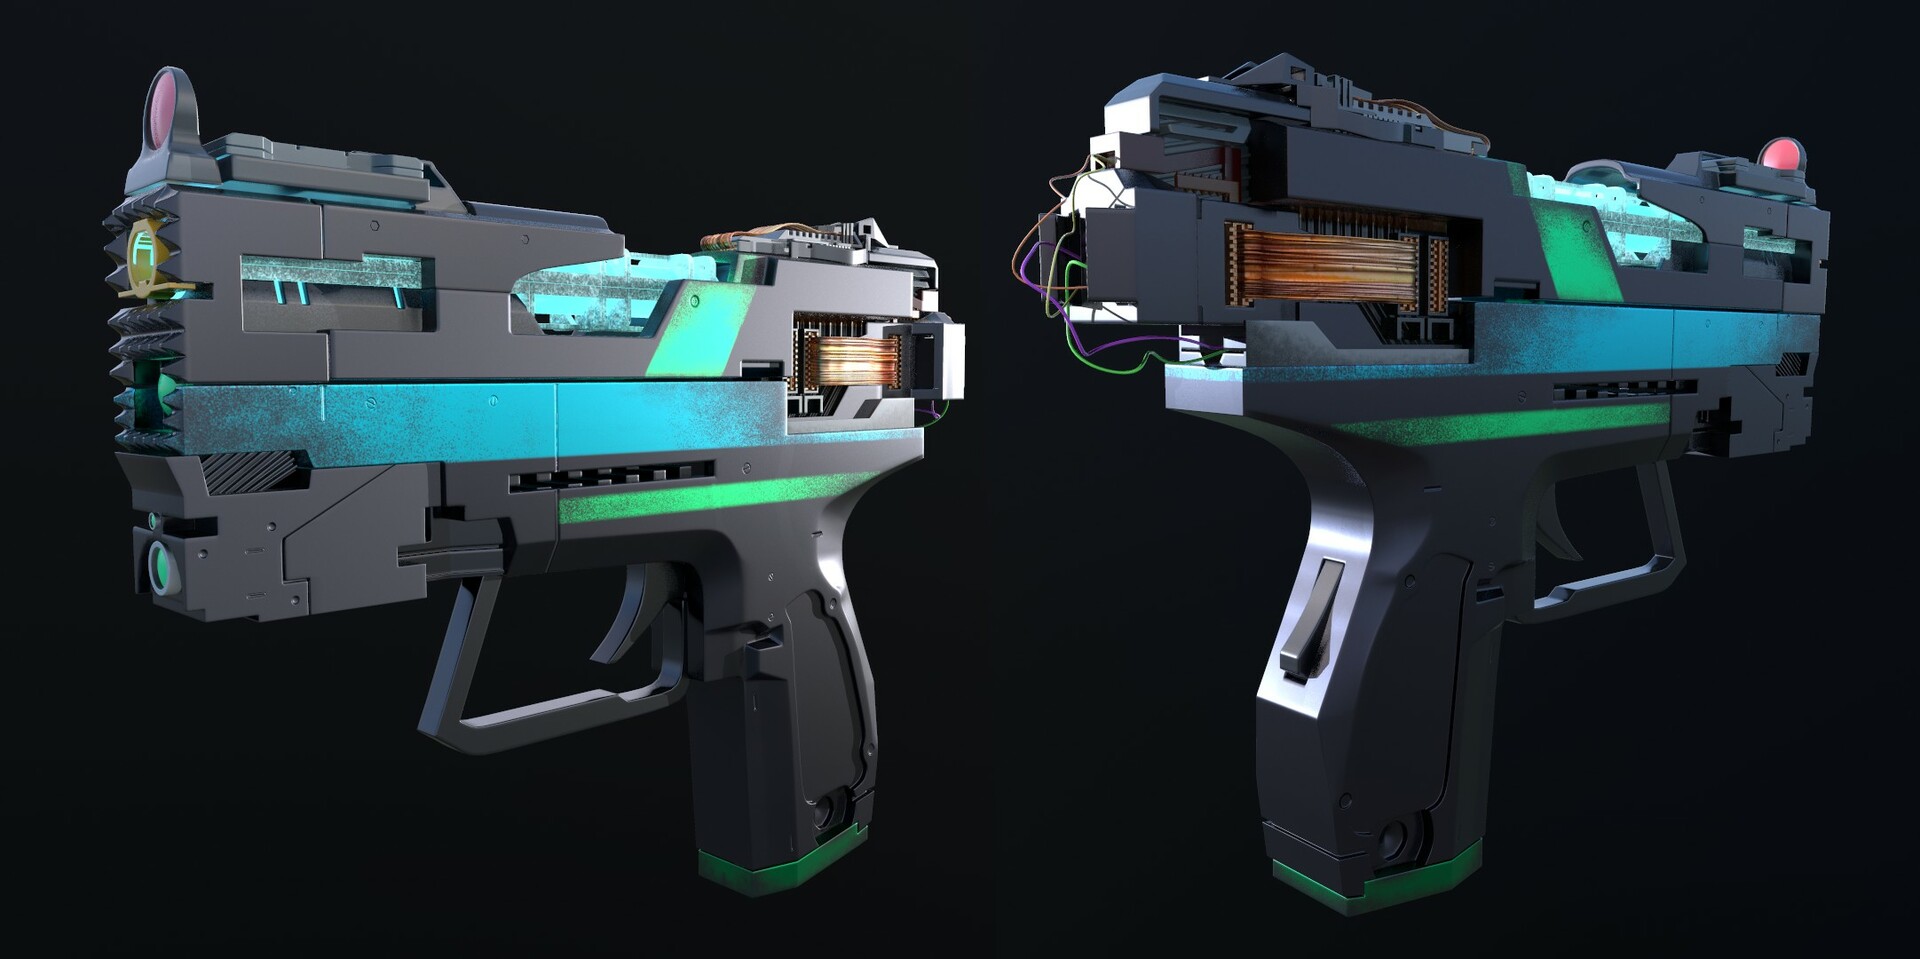 Cyberpunk pistol build фото 19